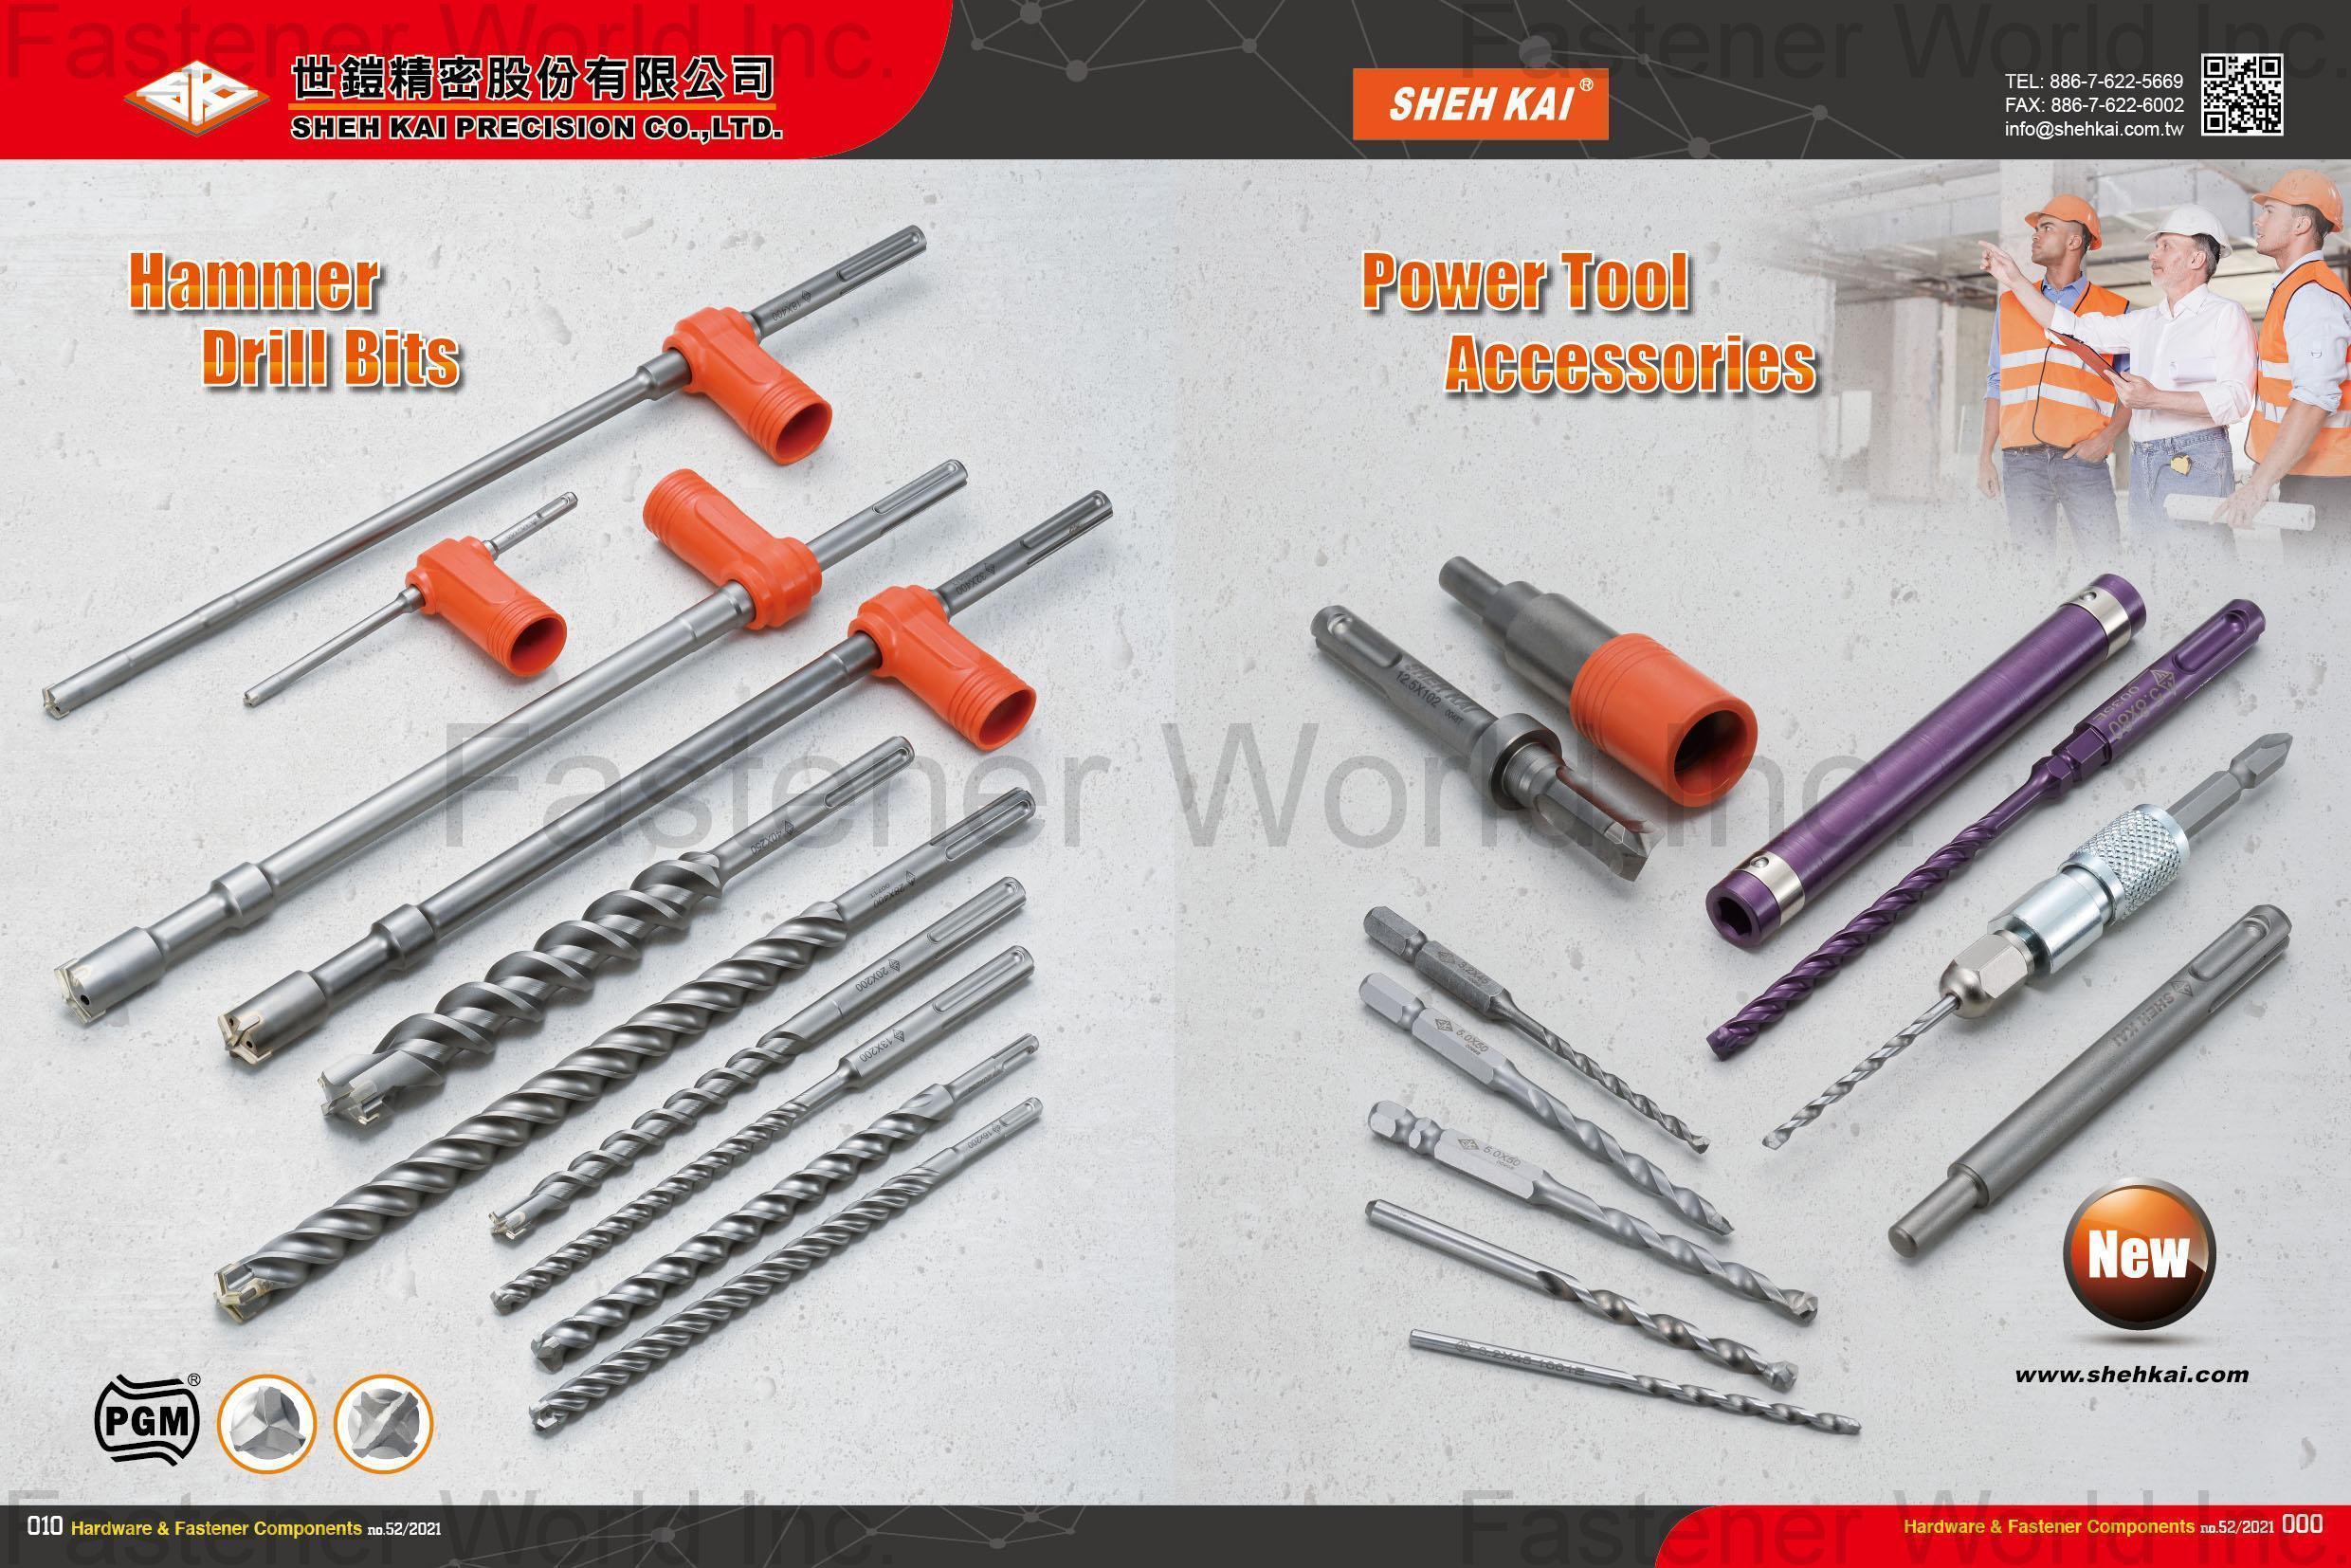 SHEH KAI PRECISION CO., LTD.  , Hammer Drill Bits, Power Tool Accessories